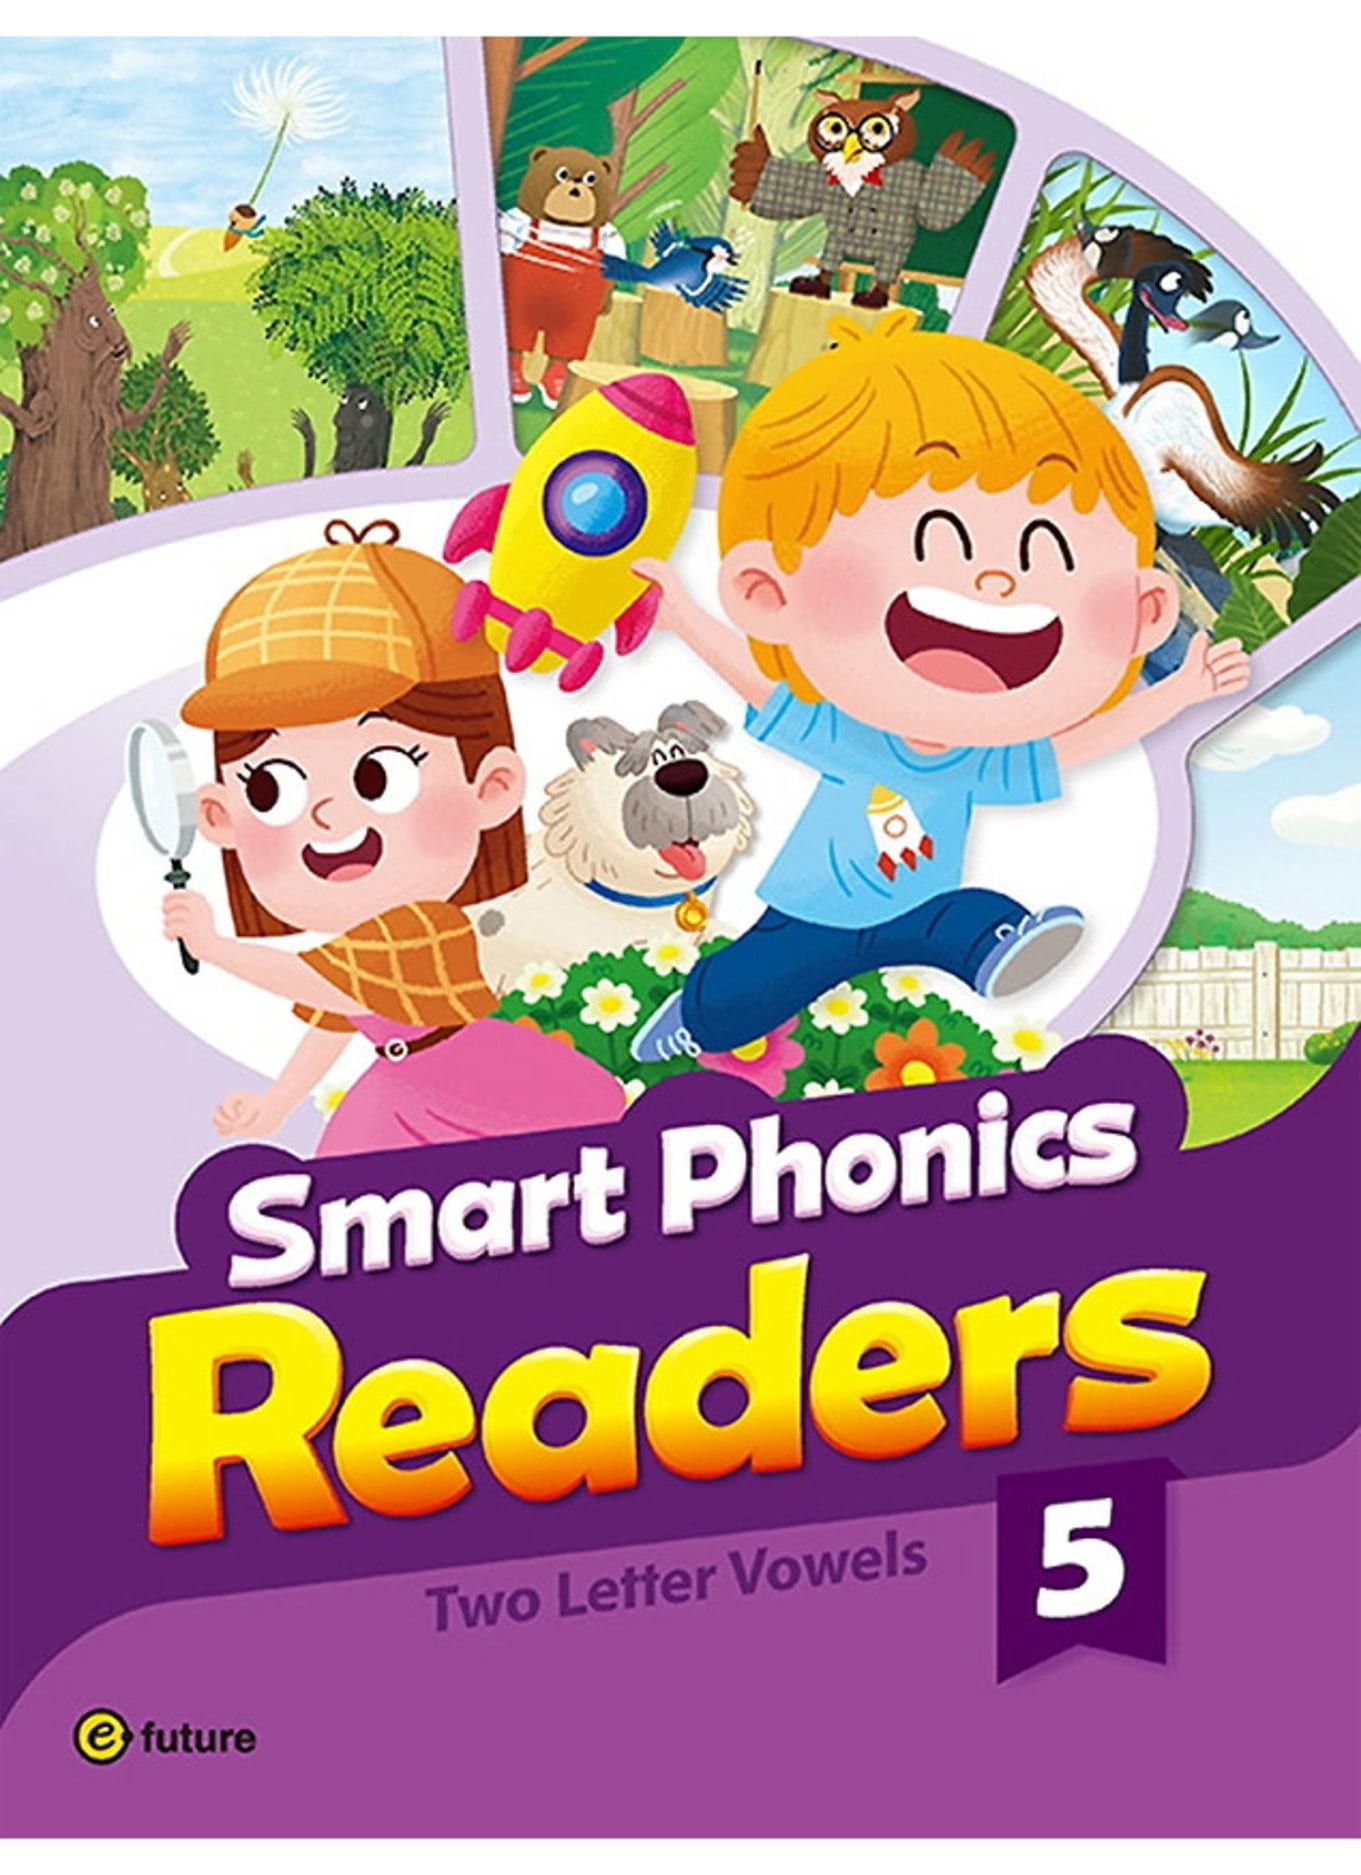 [e-future] Smart Phonics 5 Full Set (SB+WB+Readers Combined Version)